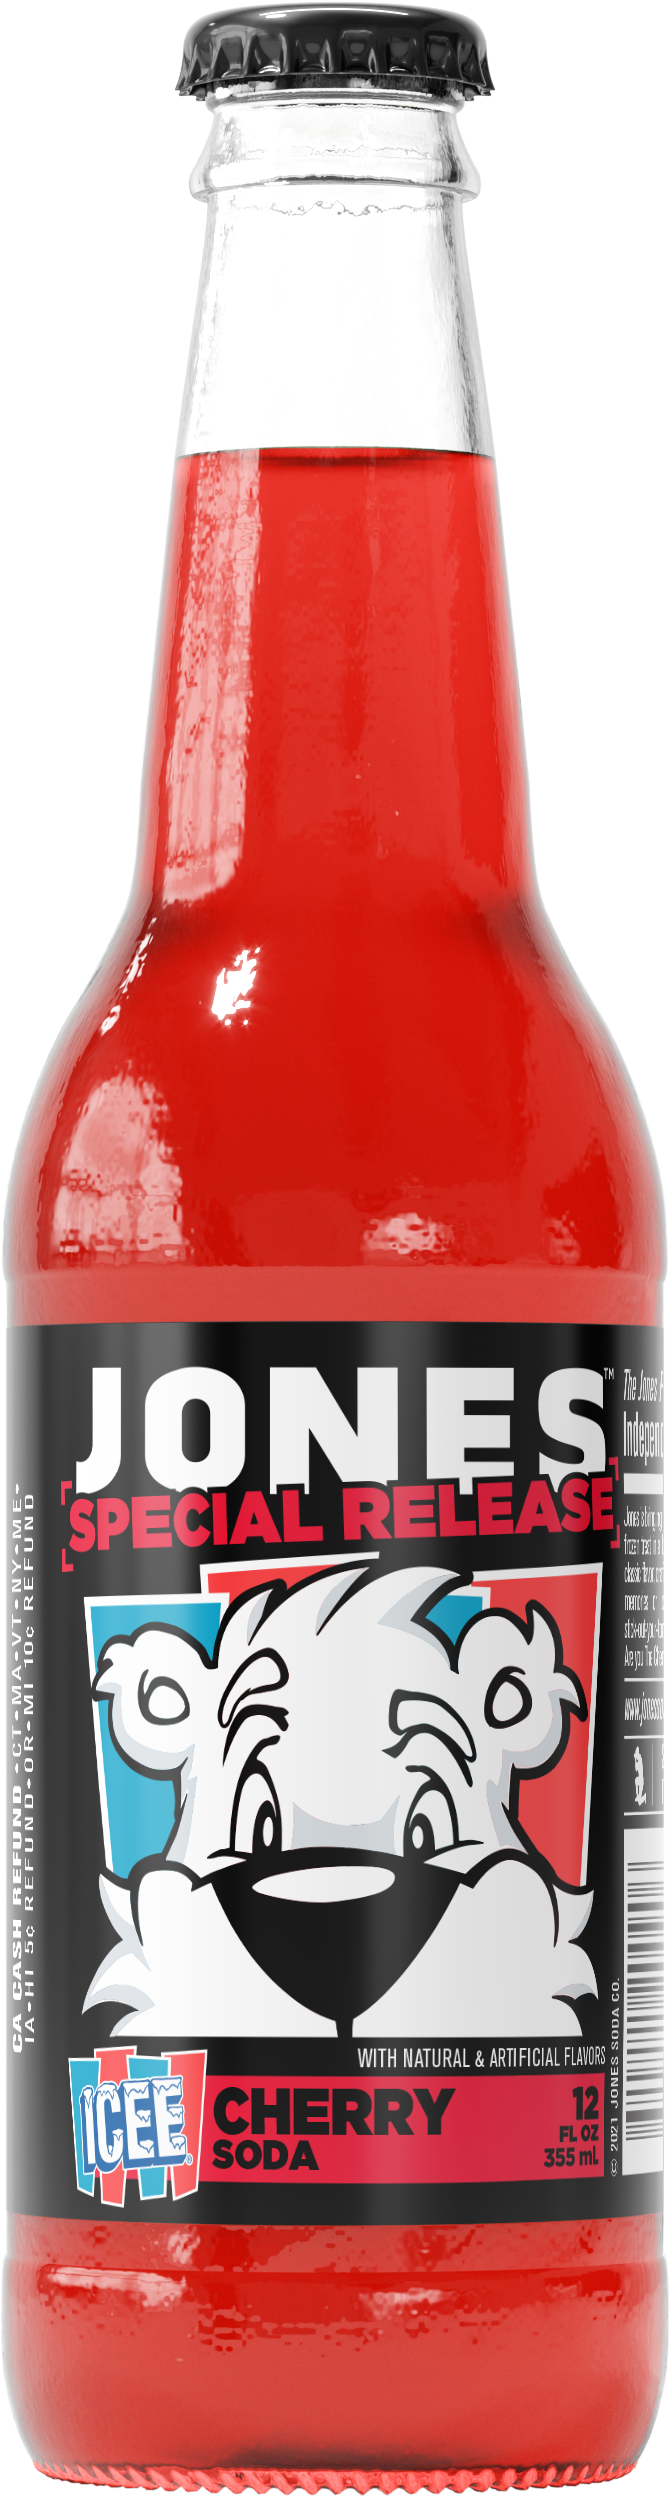 Jones Soda Teams with ICEE for Flavor Partnerships